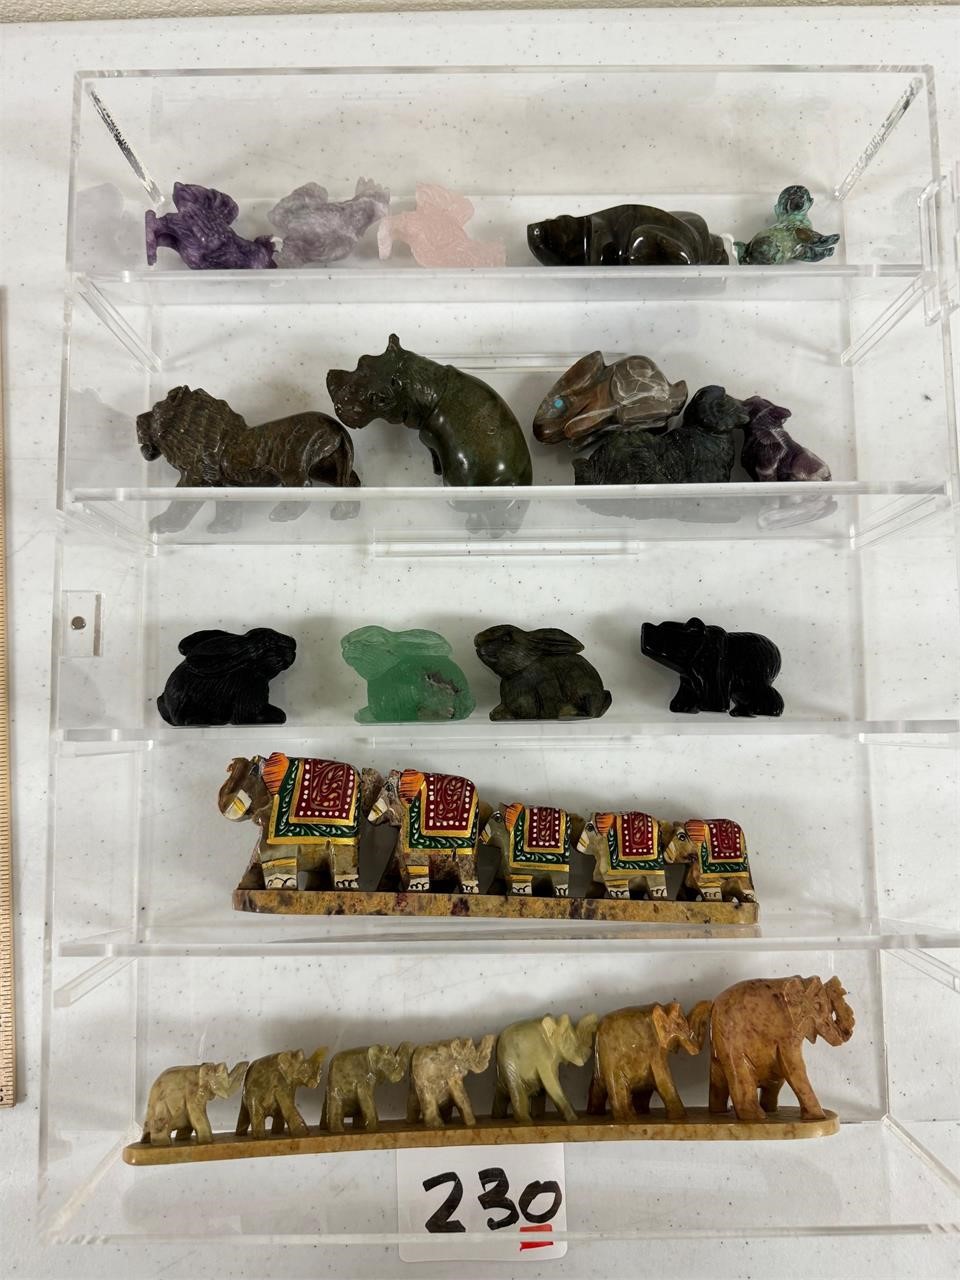 Display Case w/ Stone Animals & Fetishes 8" x 14"